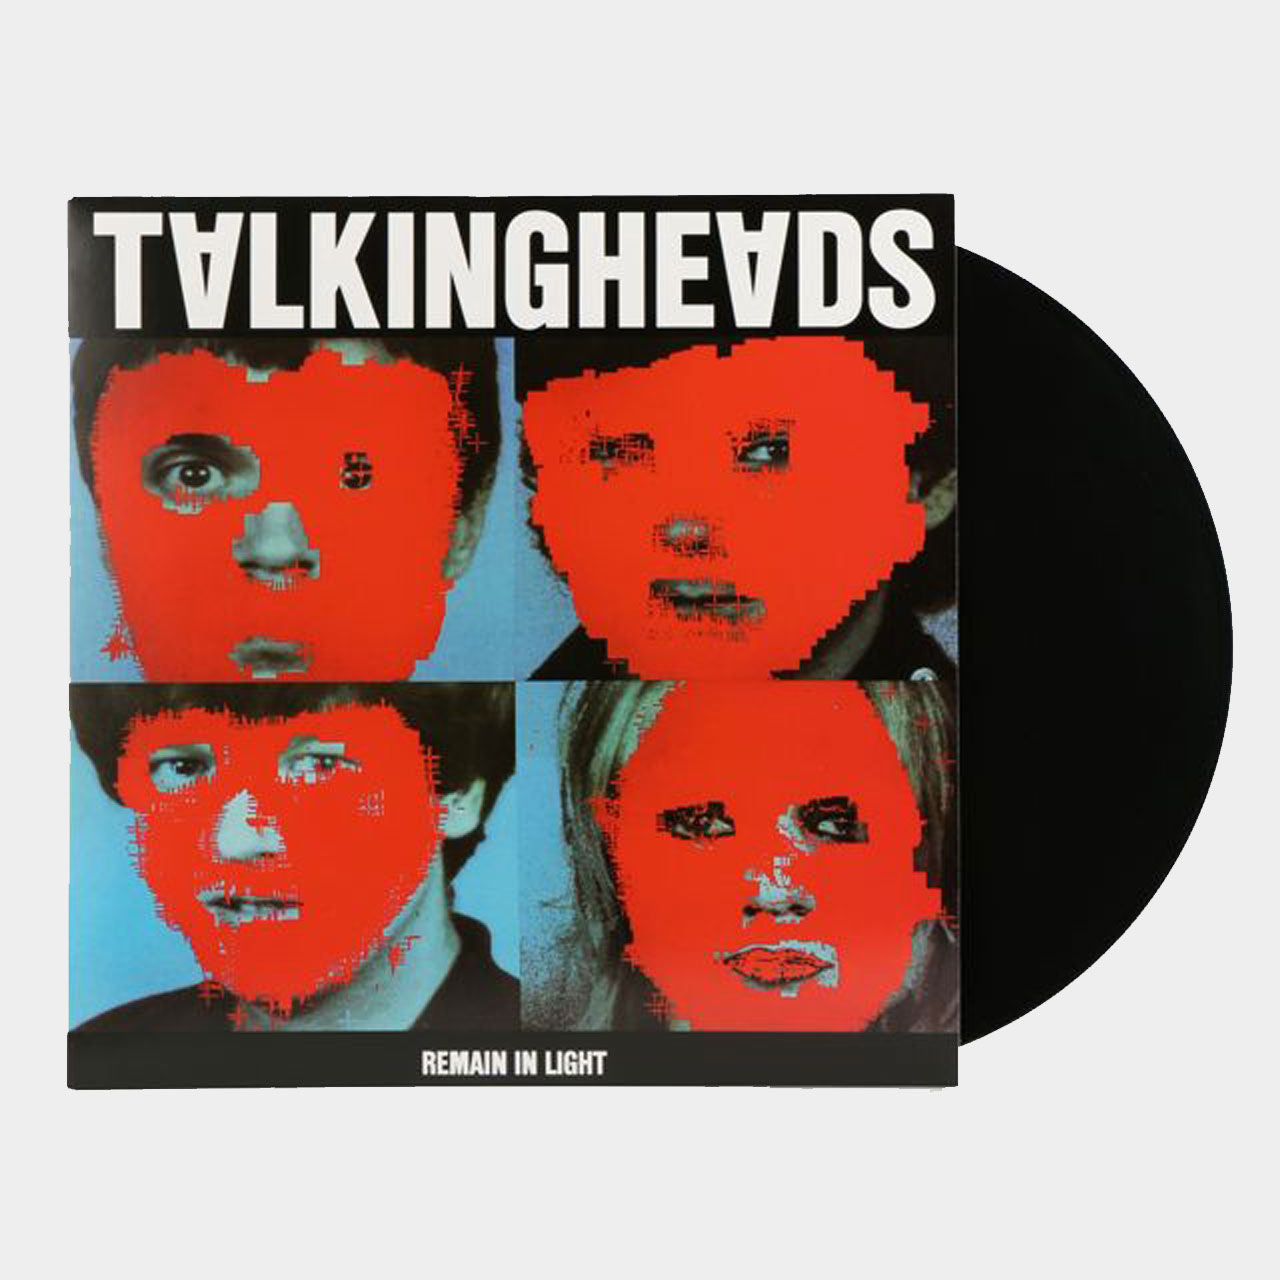 Talking Heads - Remain In Light: Vinyl LP